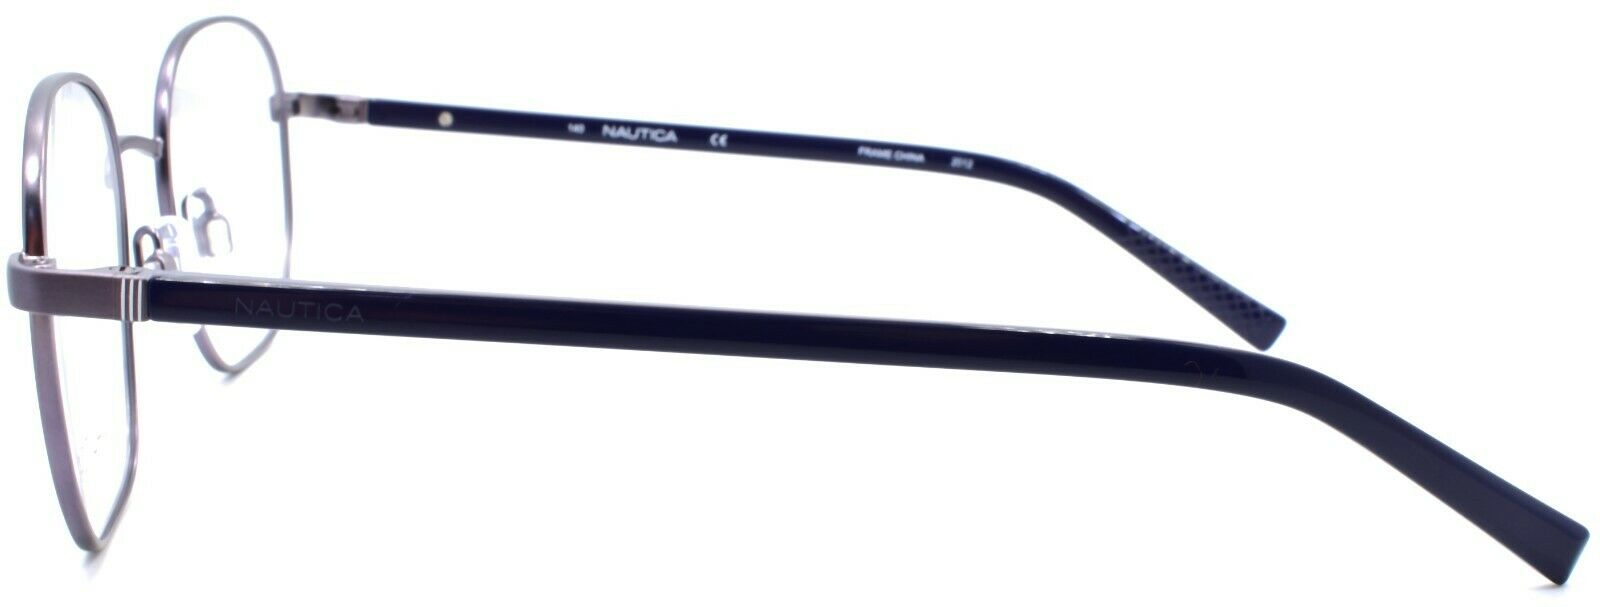 3-Nautica N7313 030 Men's Eyeglasses Frames 49-20-140 Matte Gunmetal-688940466201-IKSpecs